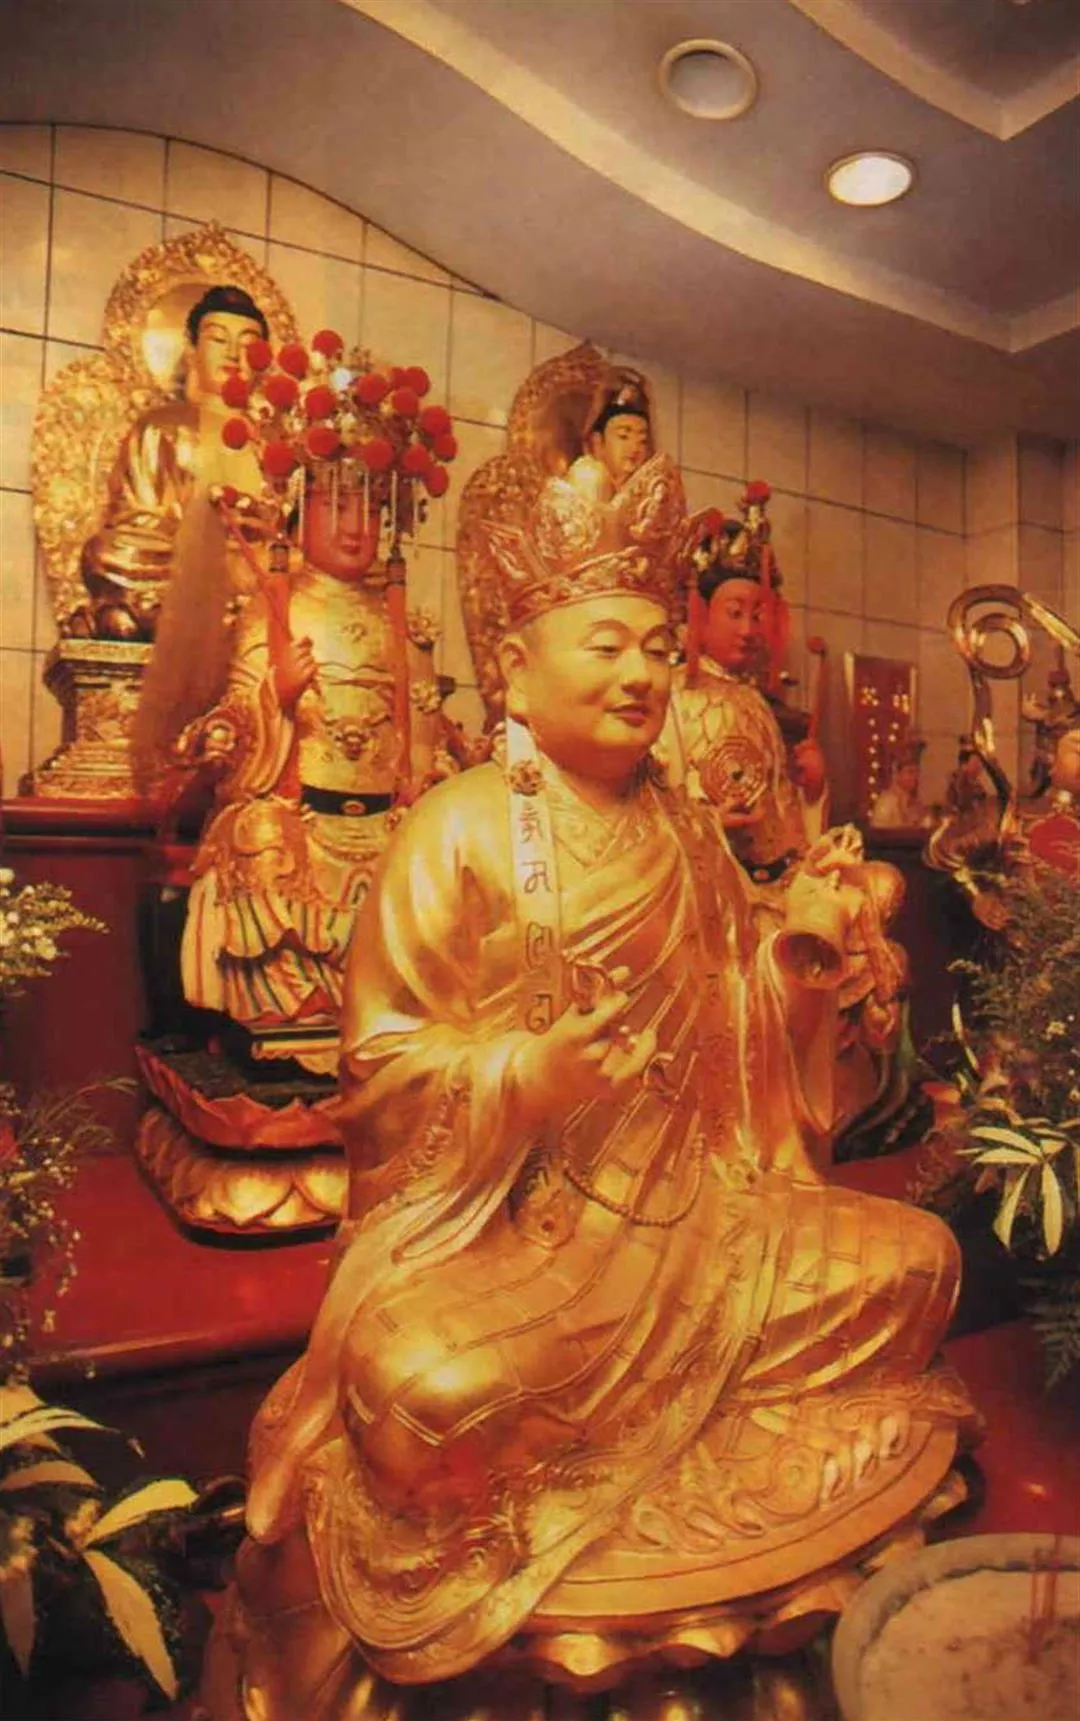 Christ the Tao: The True Buddha Sect